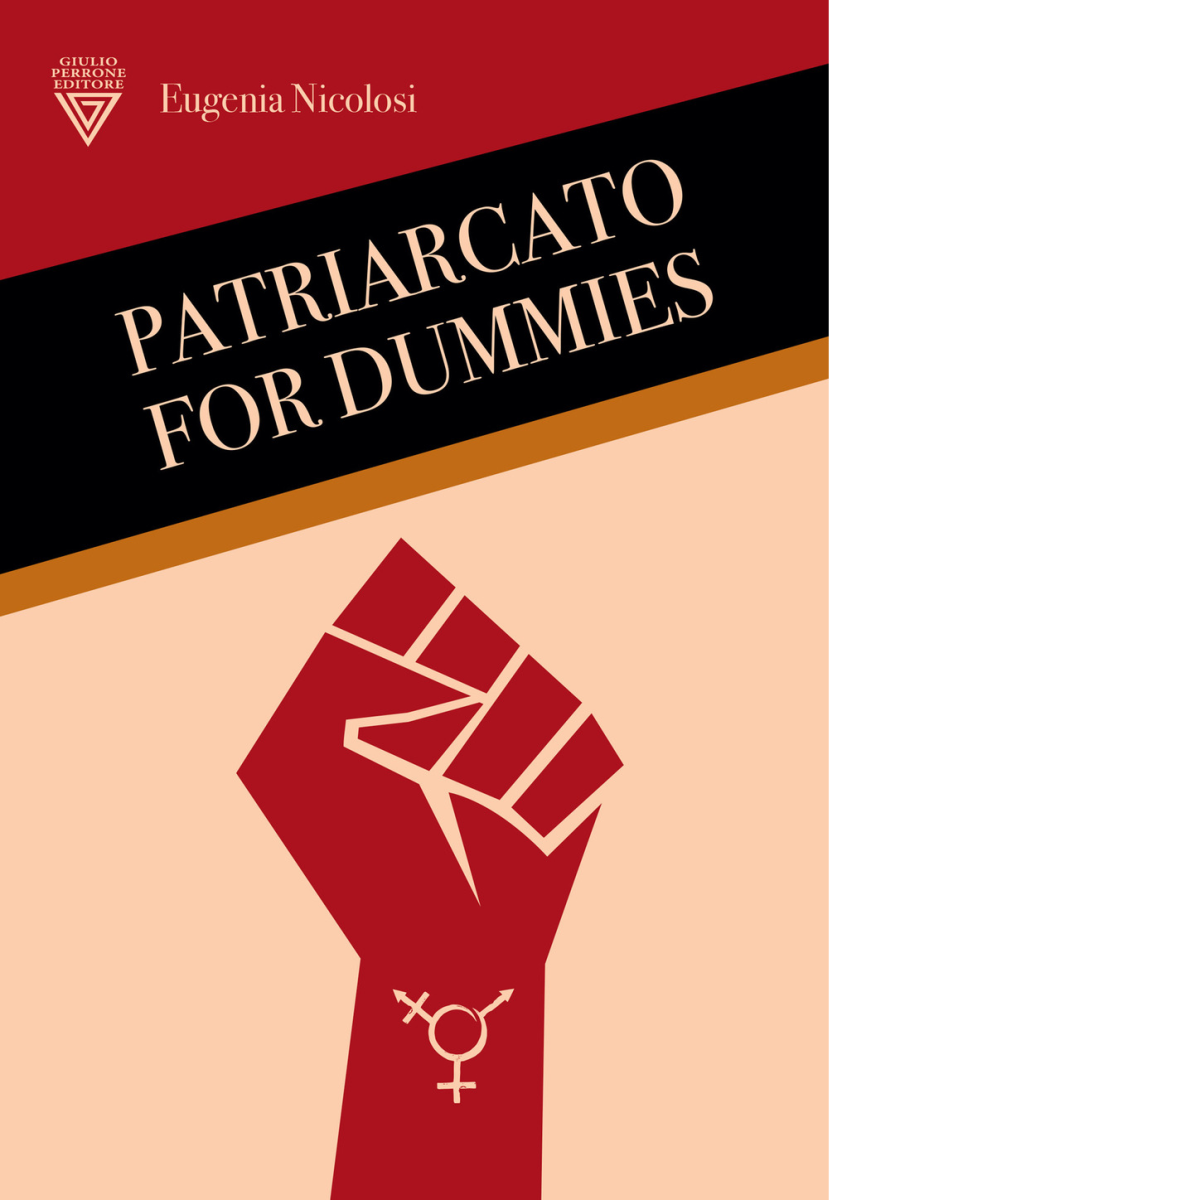 Patriarcato for dummies - Eugenia Nicolosi - Perrone, 2022 libro usato